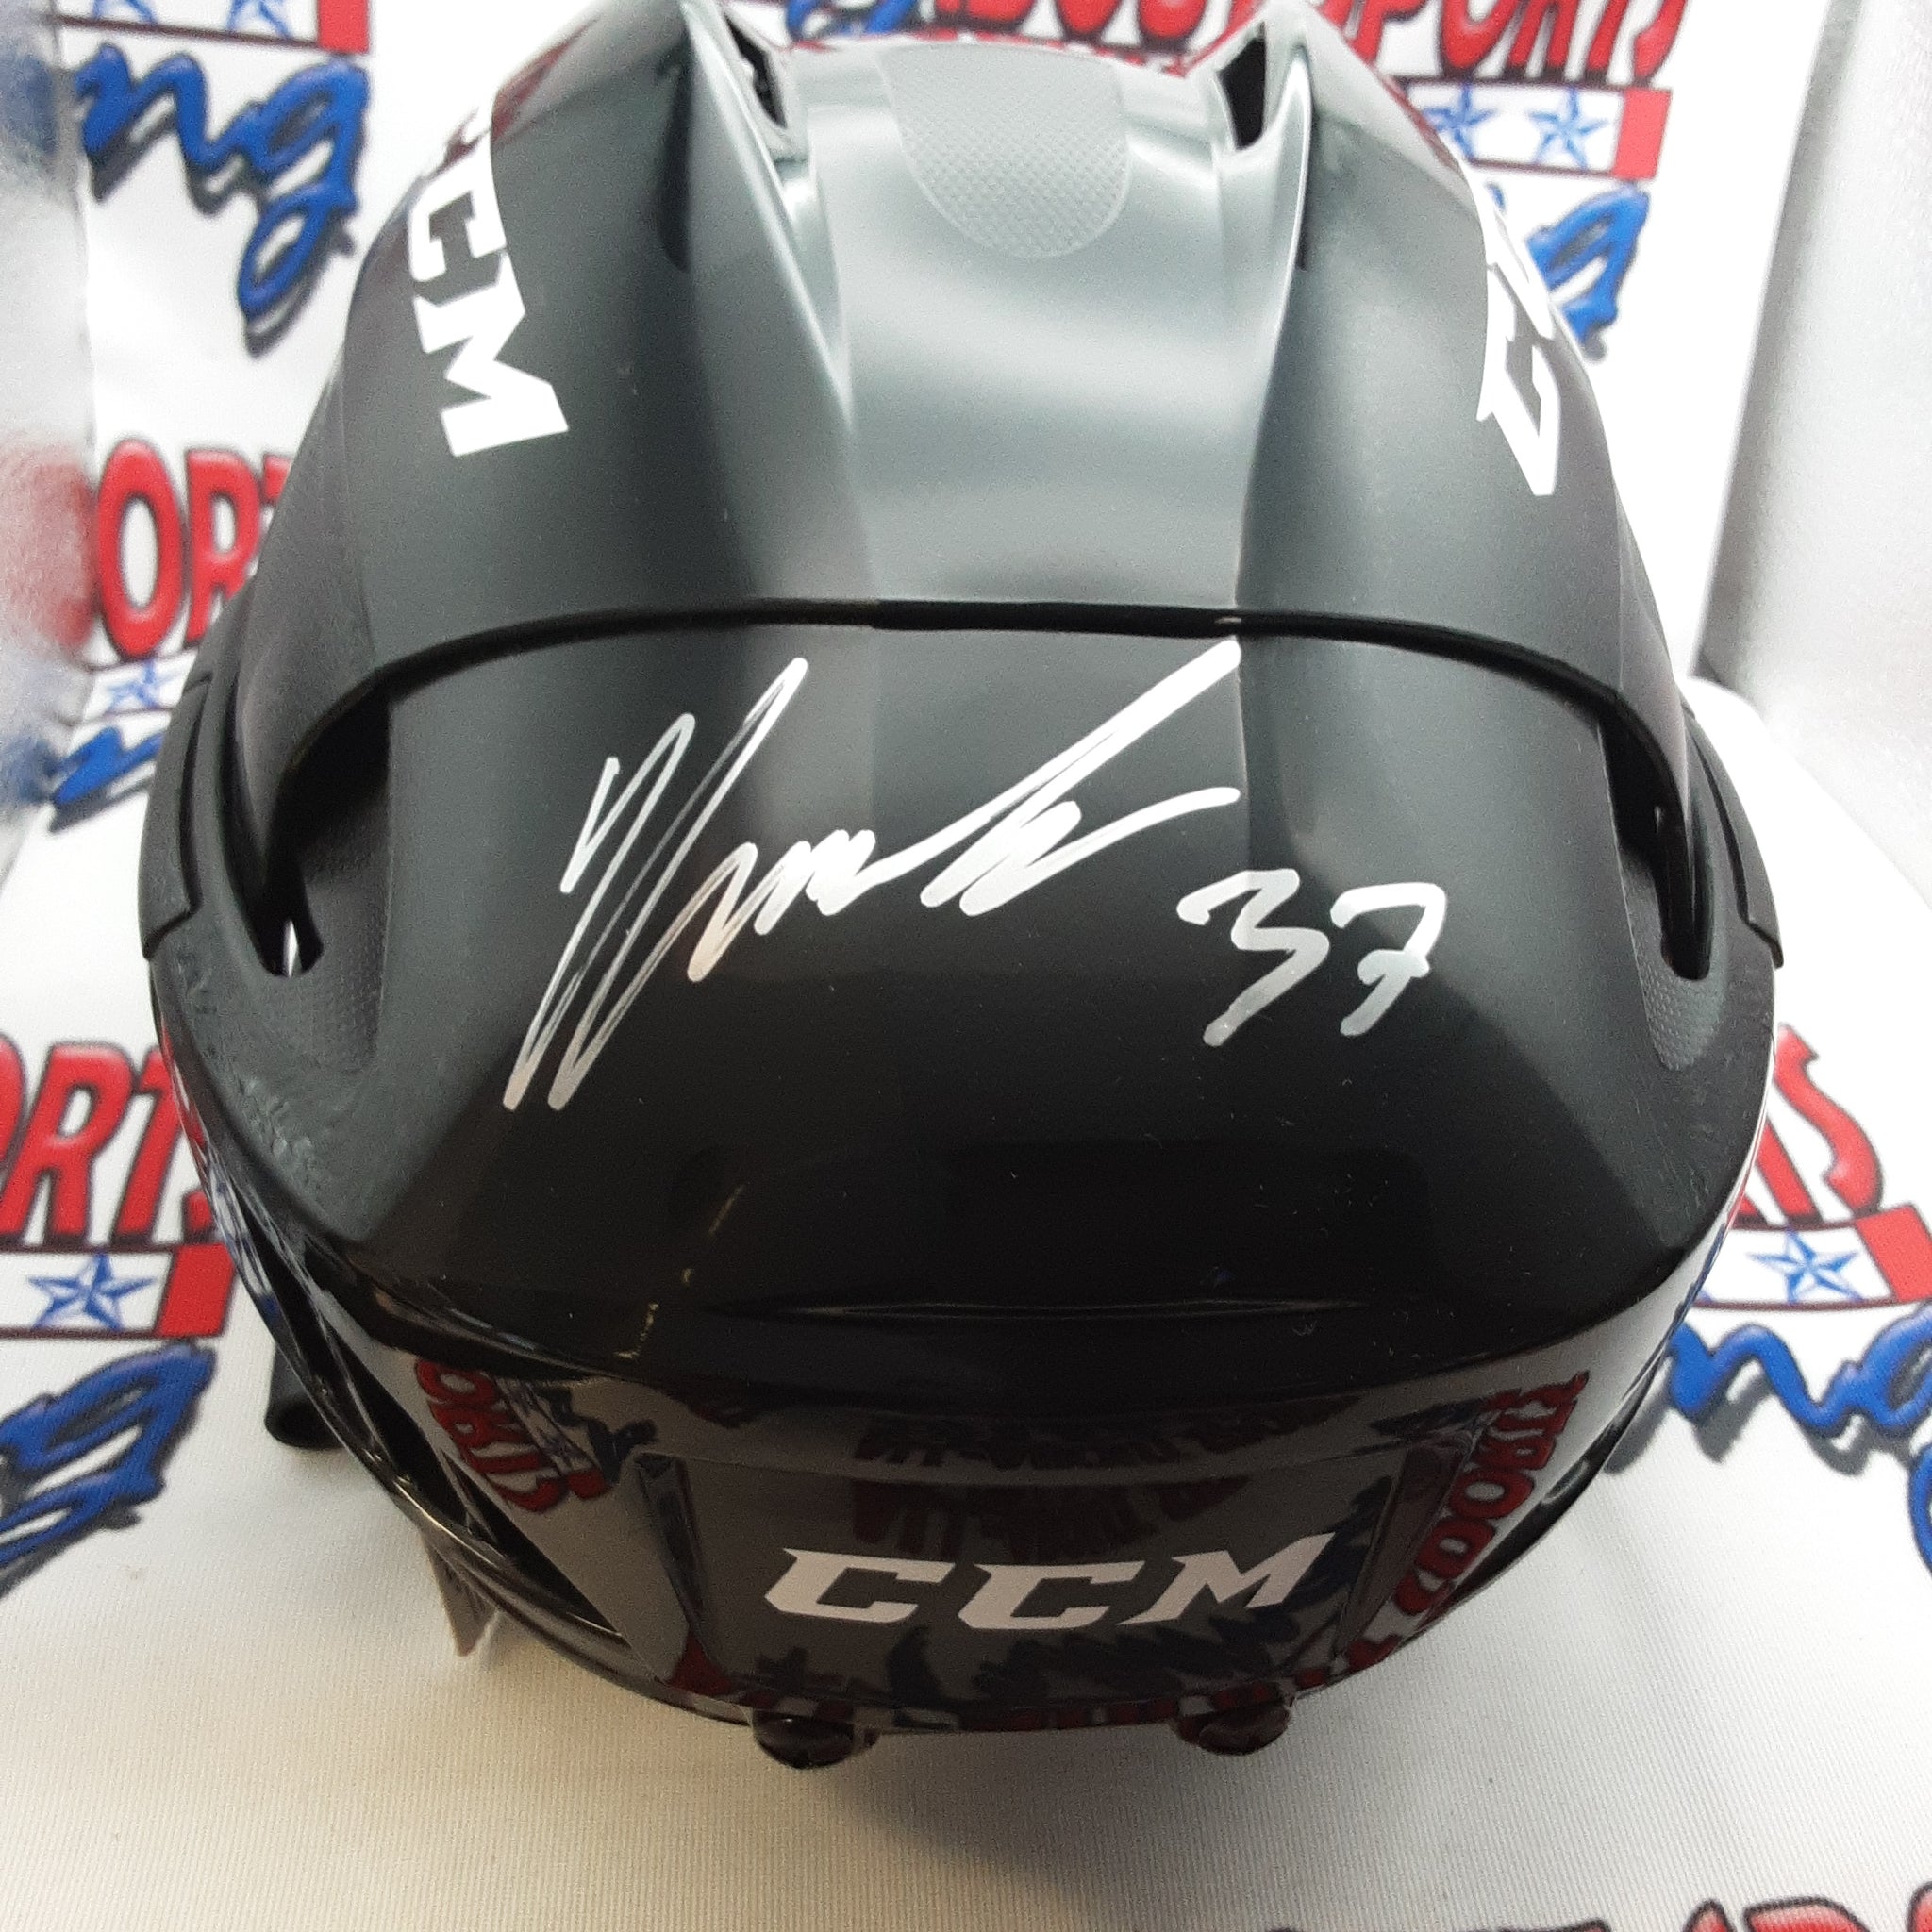 Yanni Gourde Authentic Signed Autographed Full Size Hockey Helmet JSA.